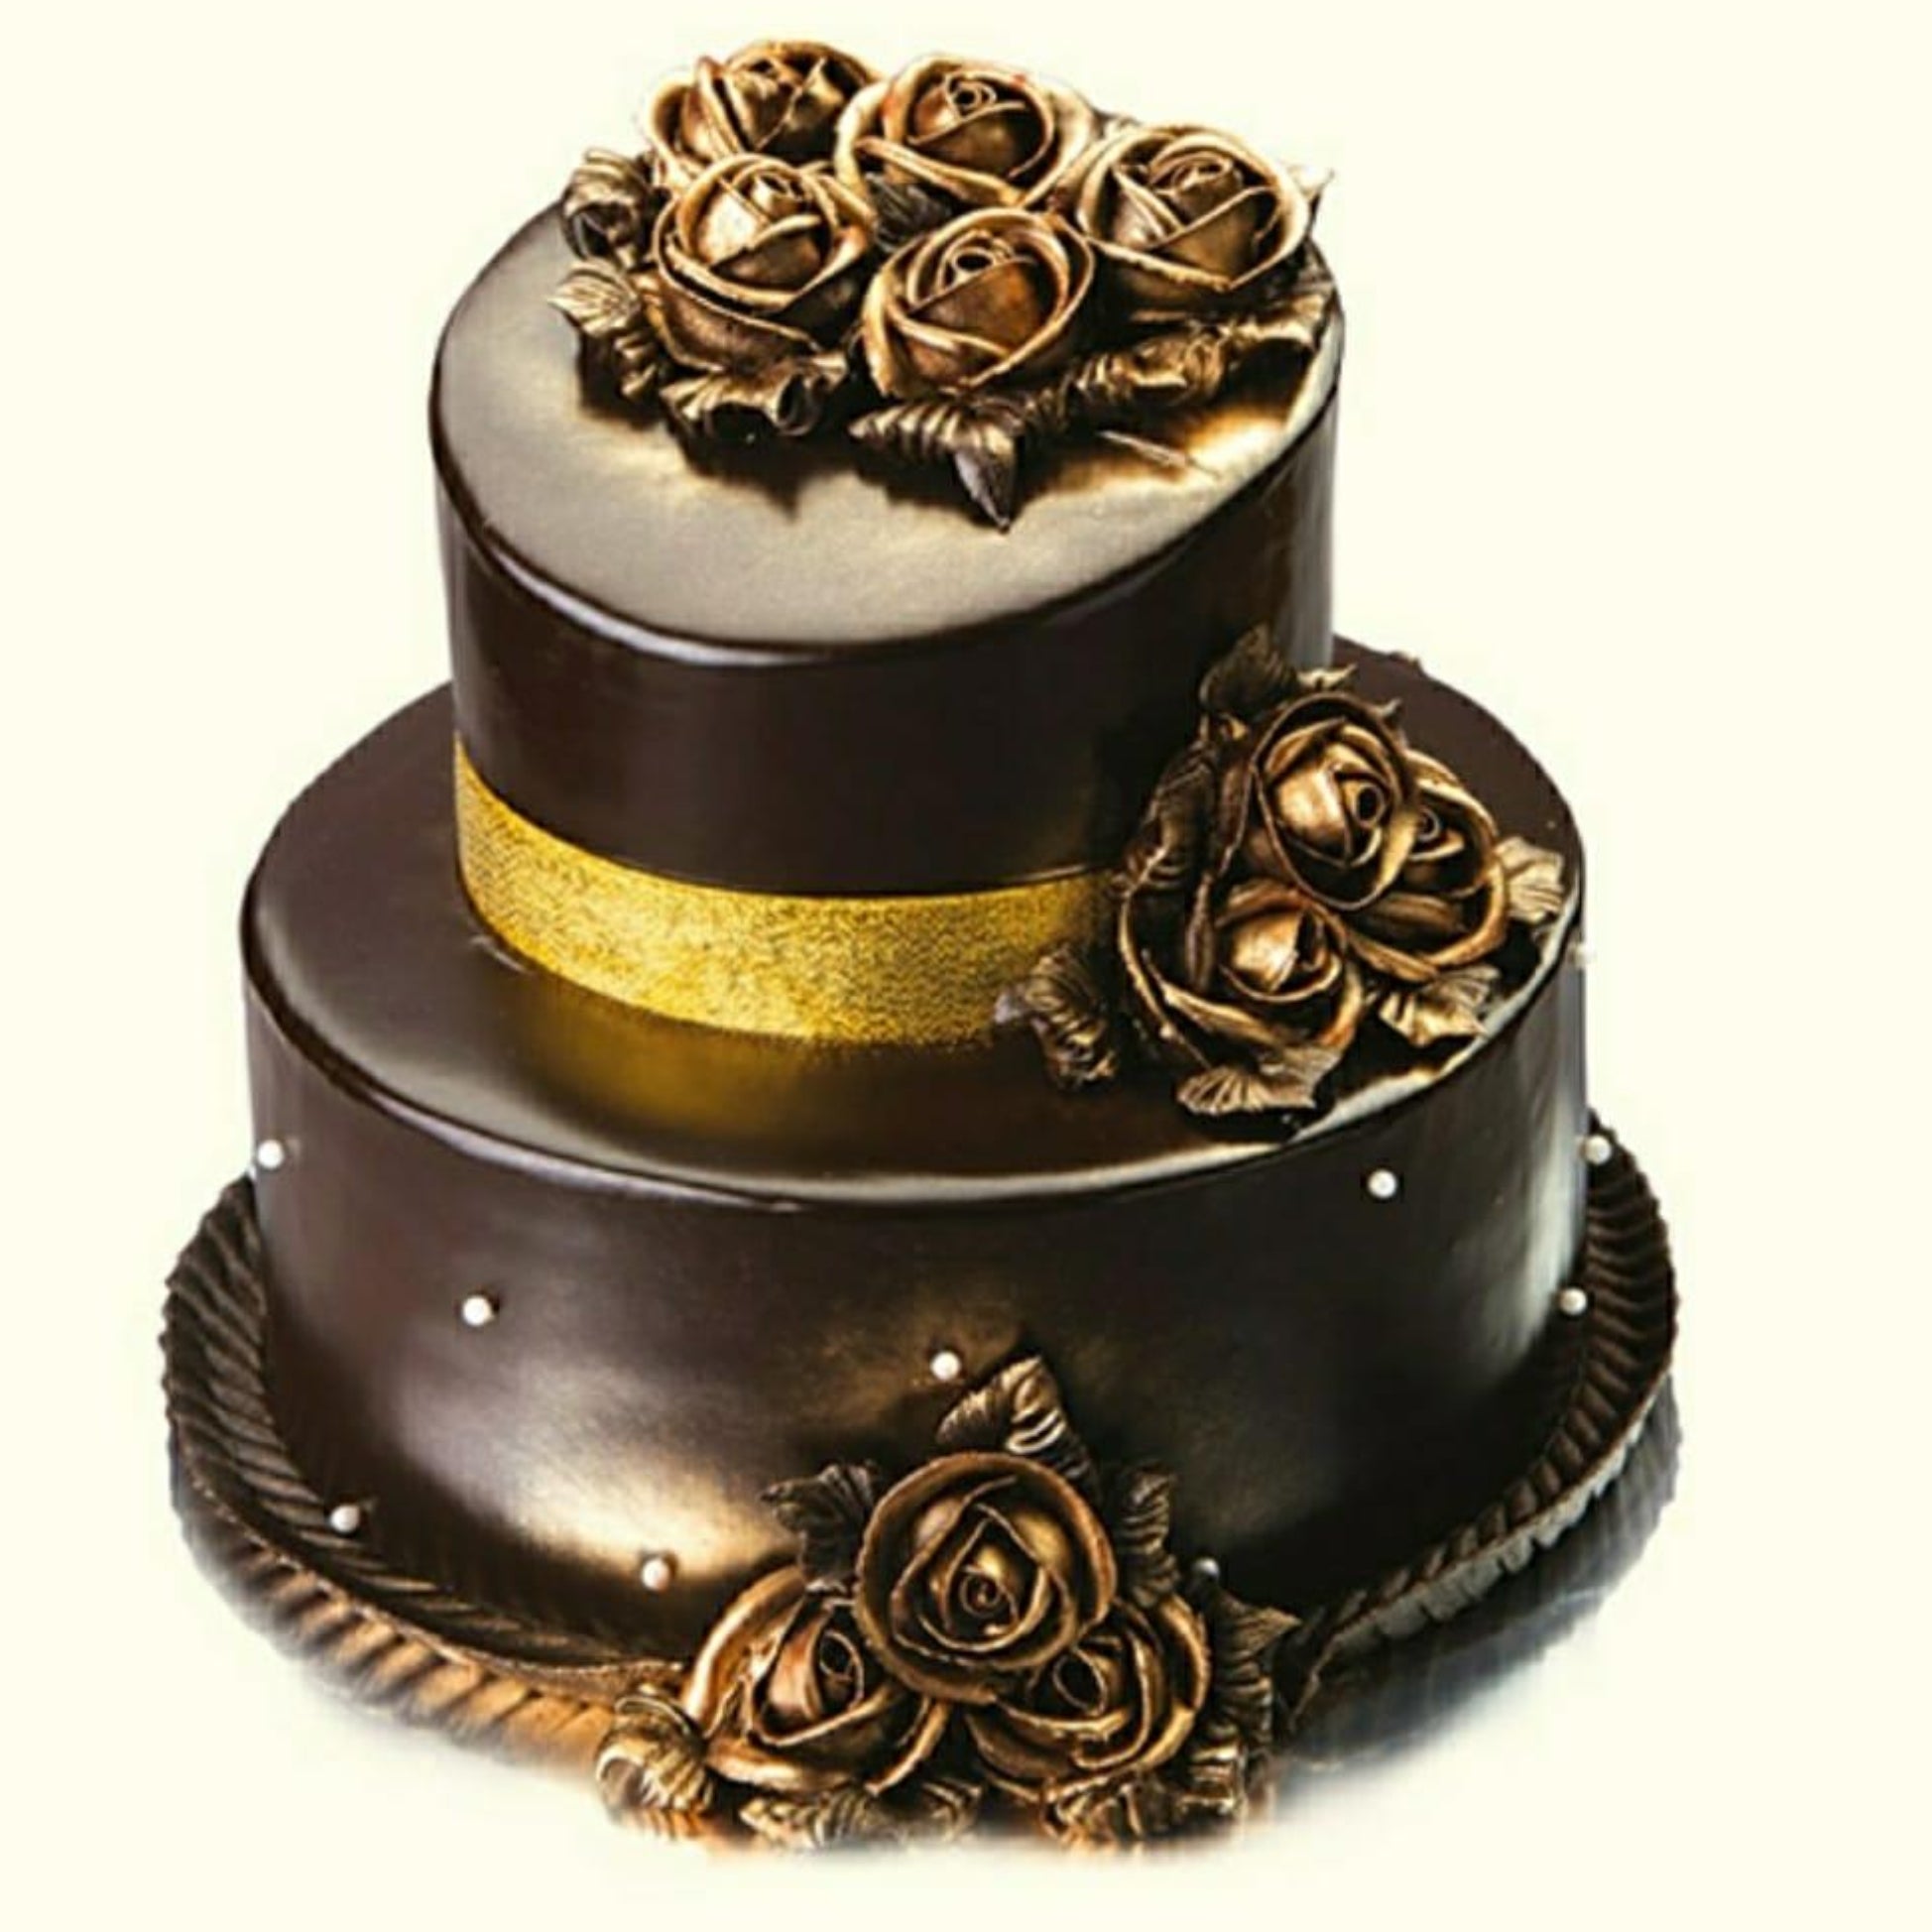 Two Tier Wedding Cake Design